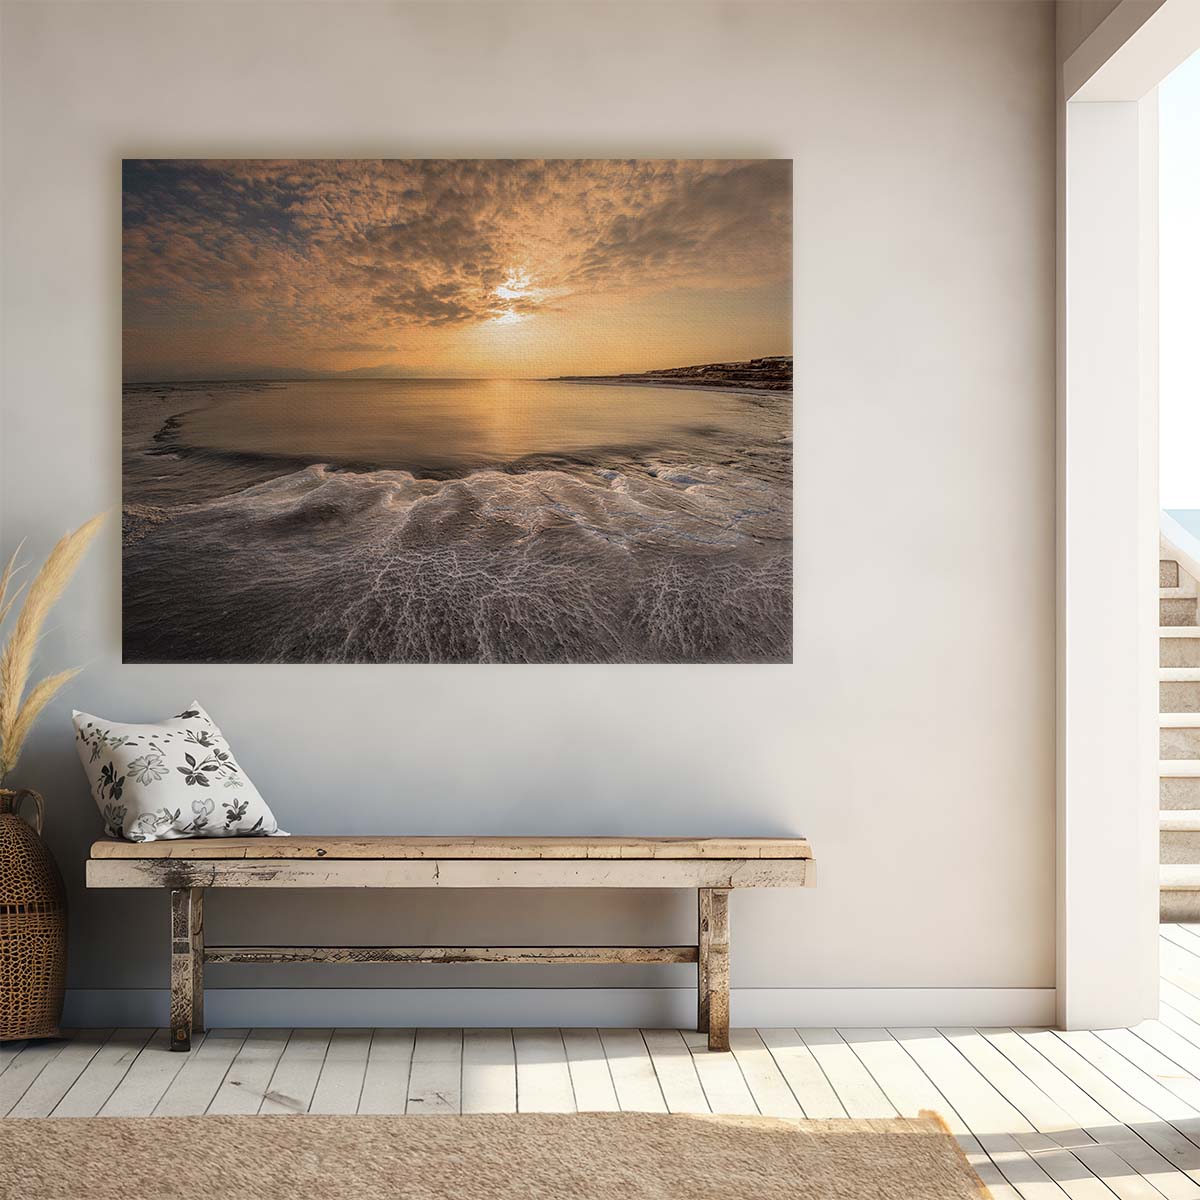 Coastal Sunset Seascape Ocean & Beach Wall Art by Luxuriance Designs. Made in USA.